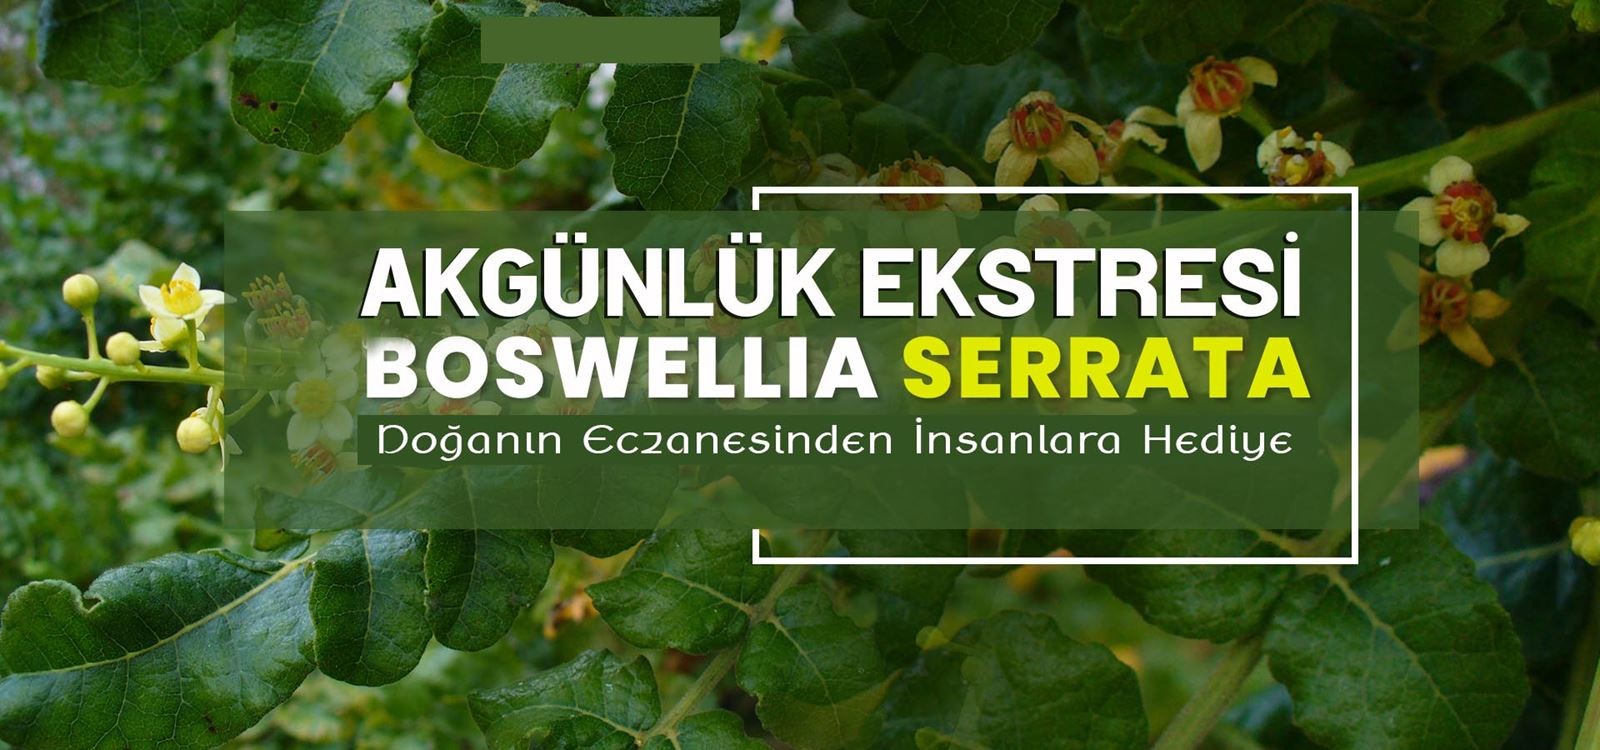 Boswellia-Serrata-Akgunluk